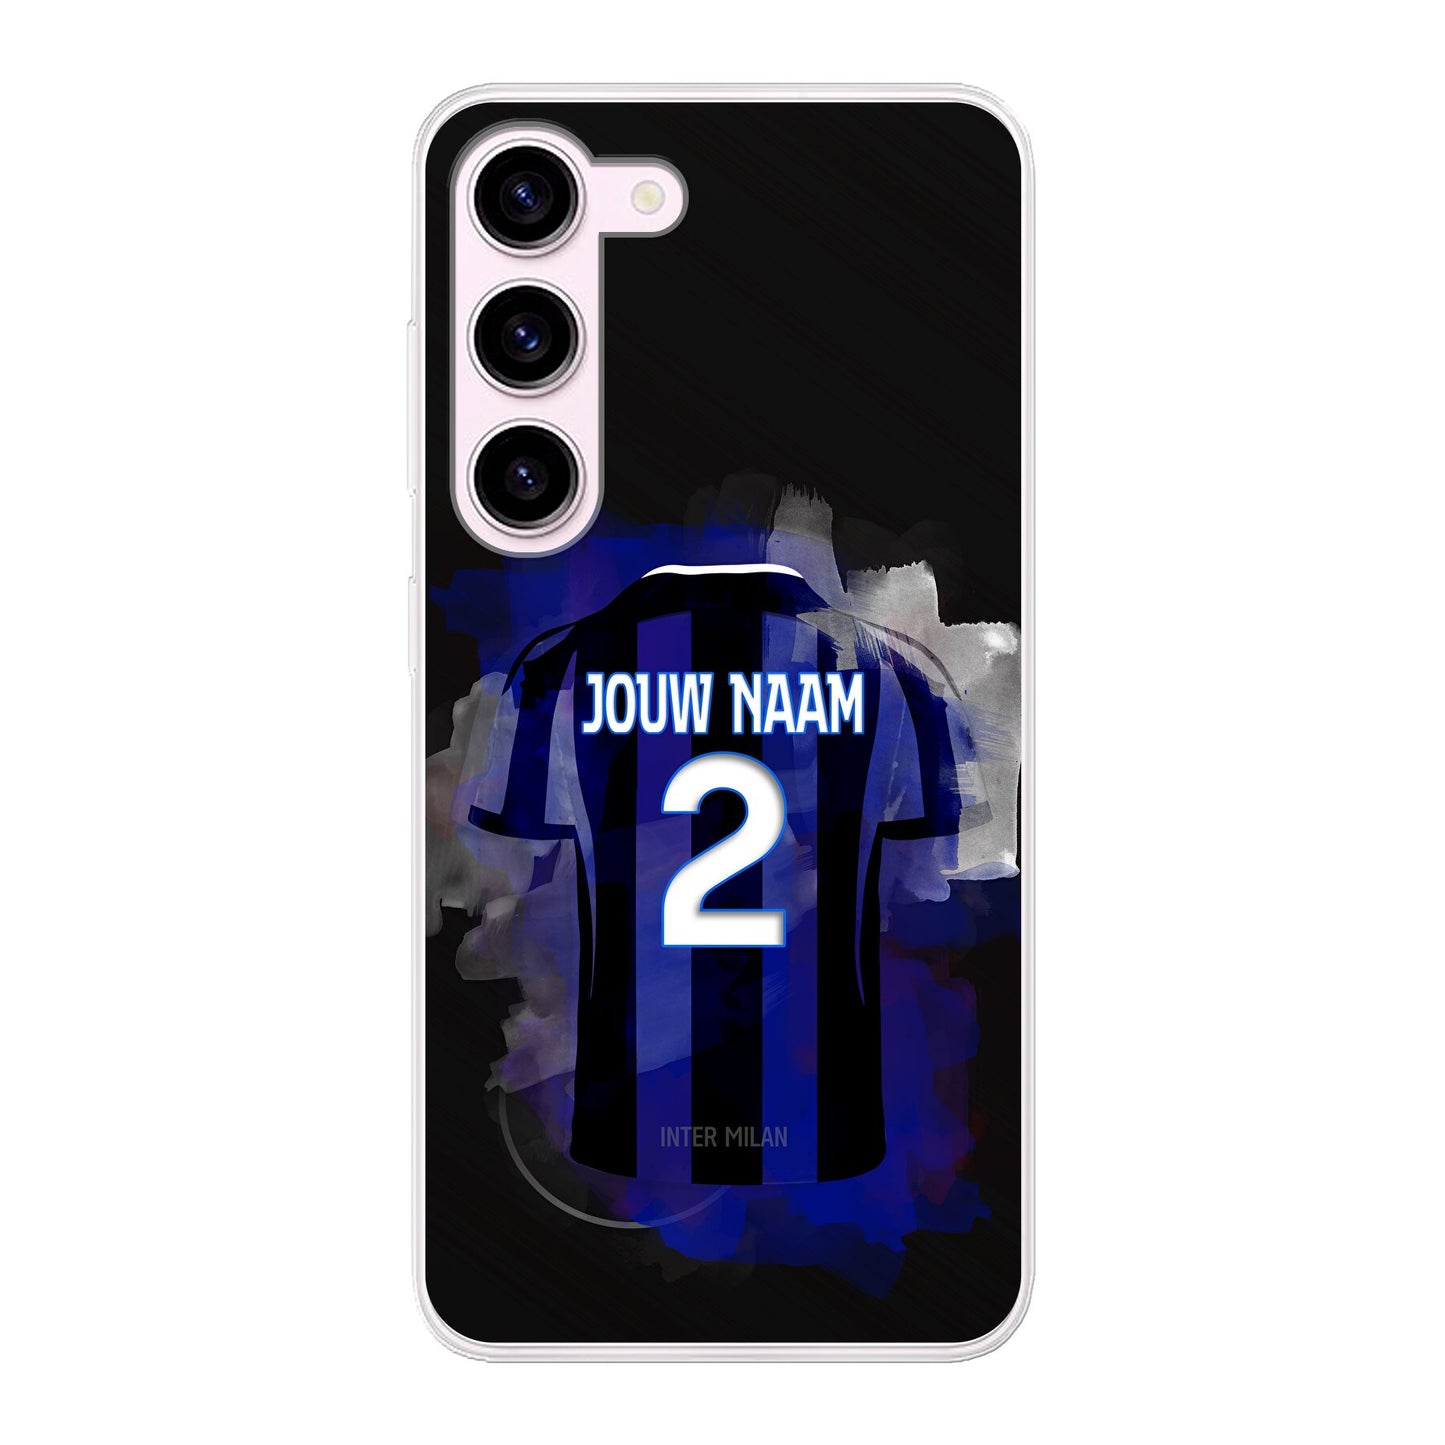 Inter Milan telefoonhoesje